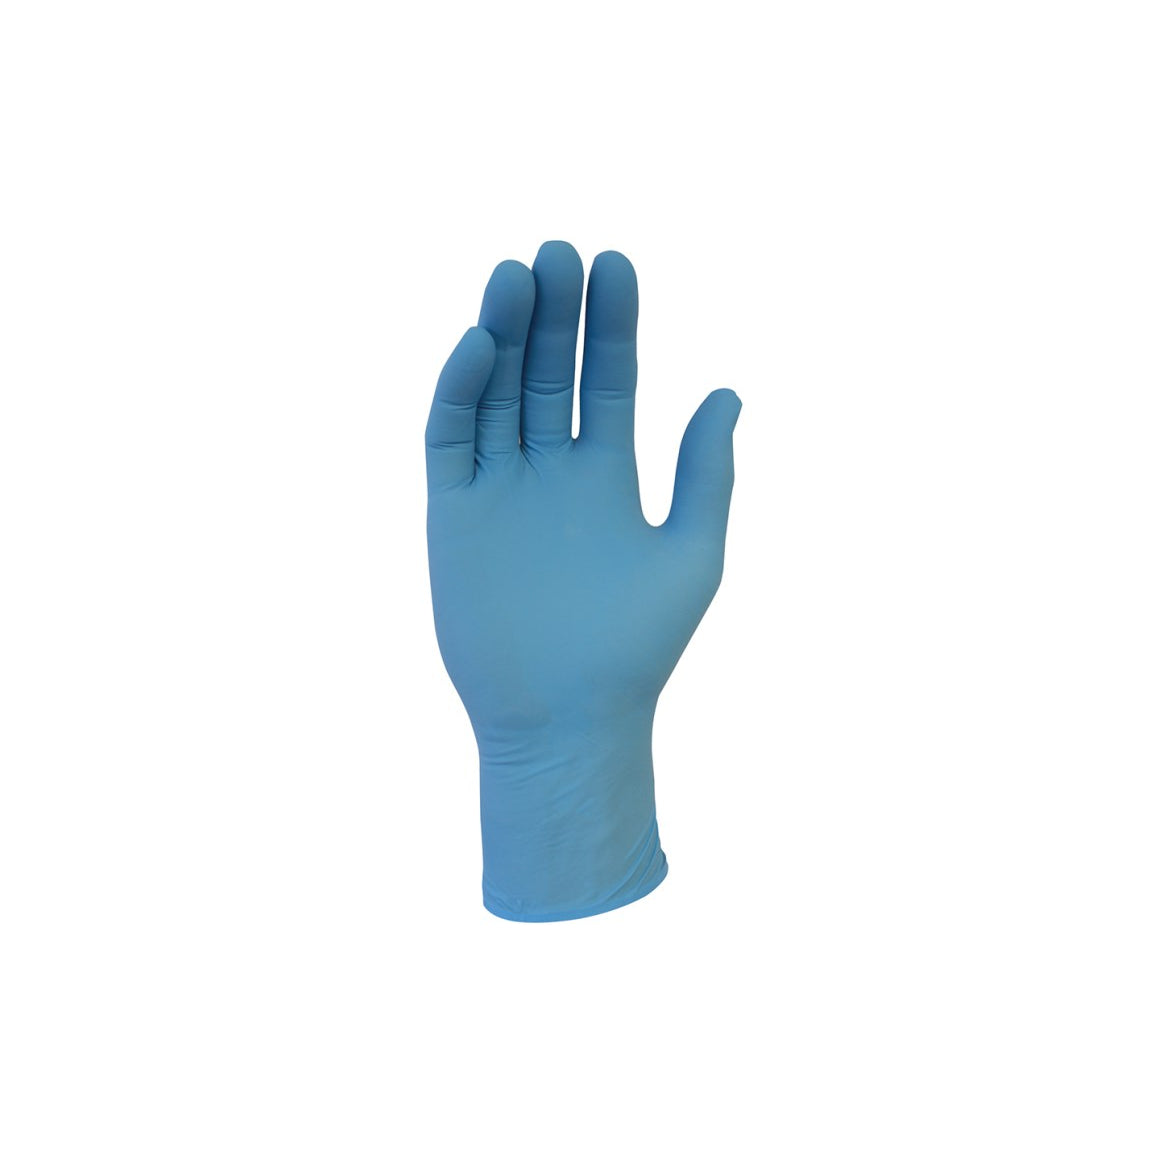 Disposable Vinyl Gloves Large 100